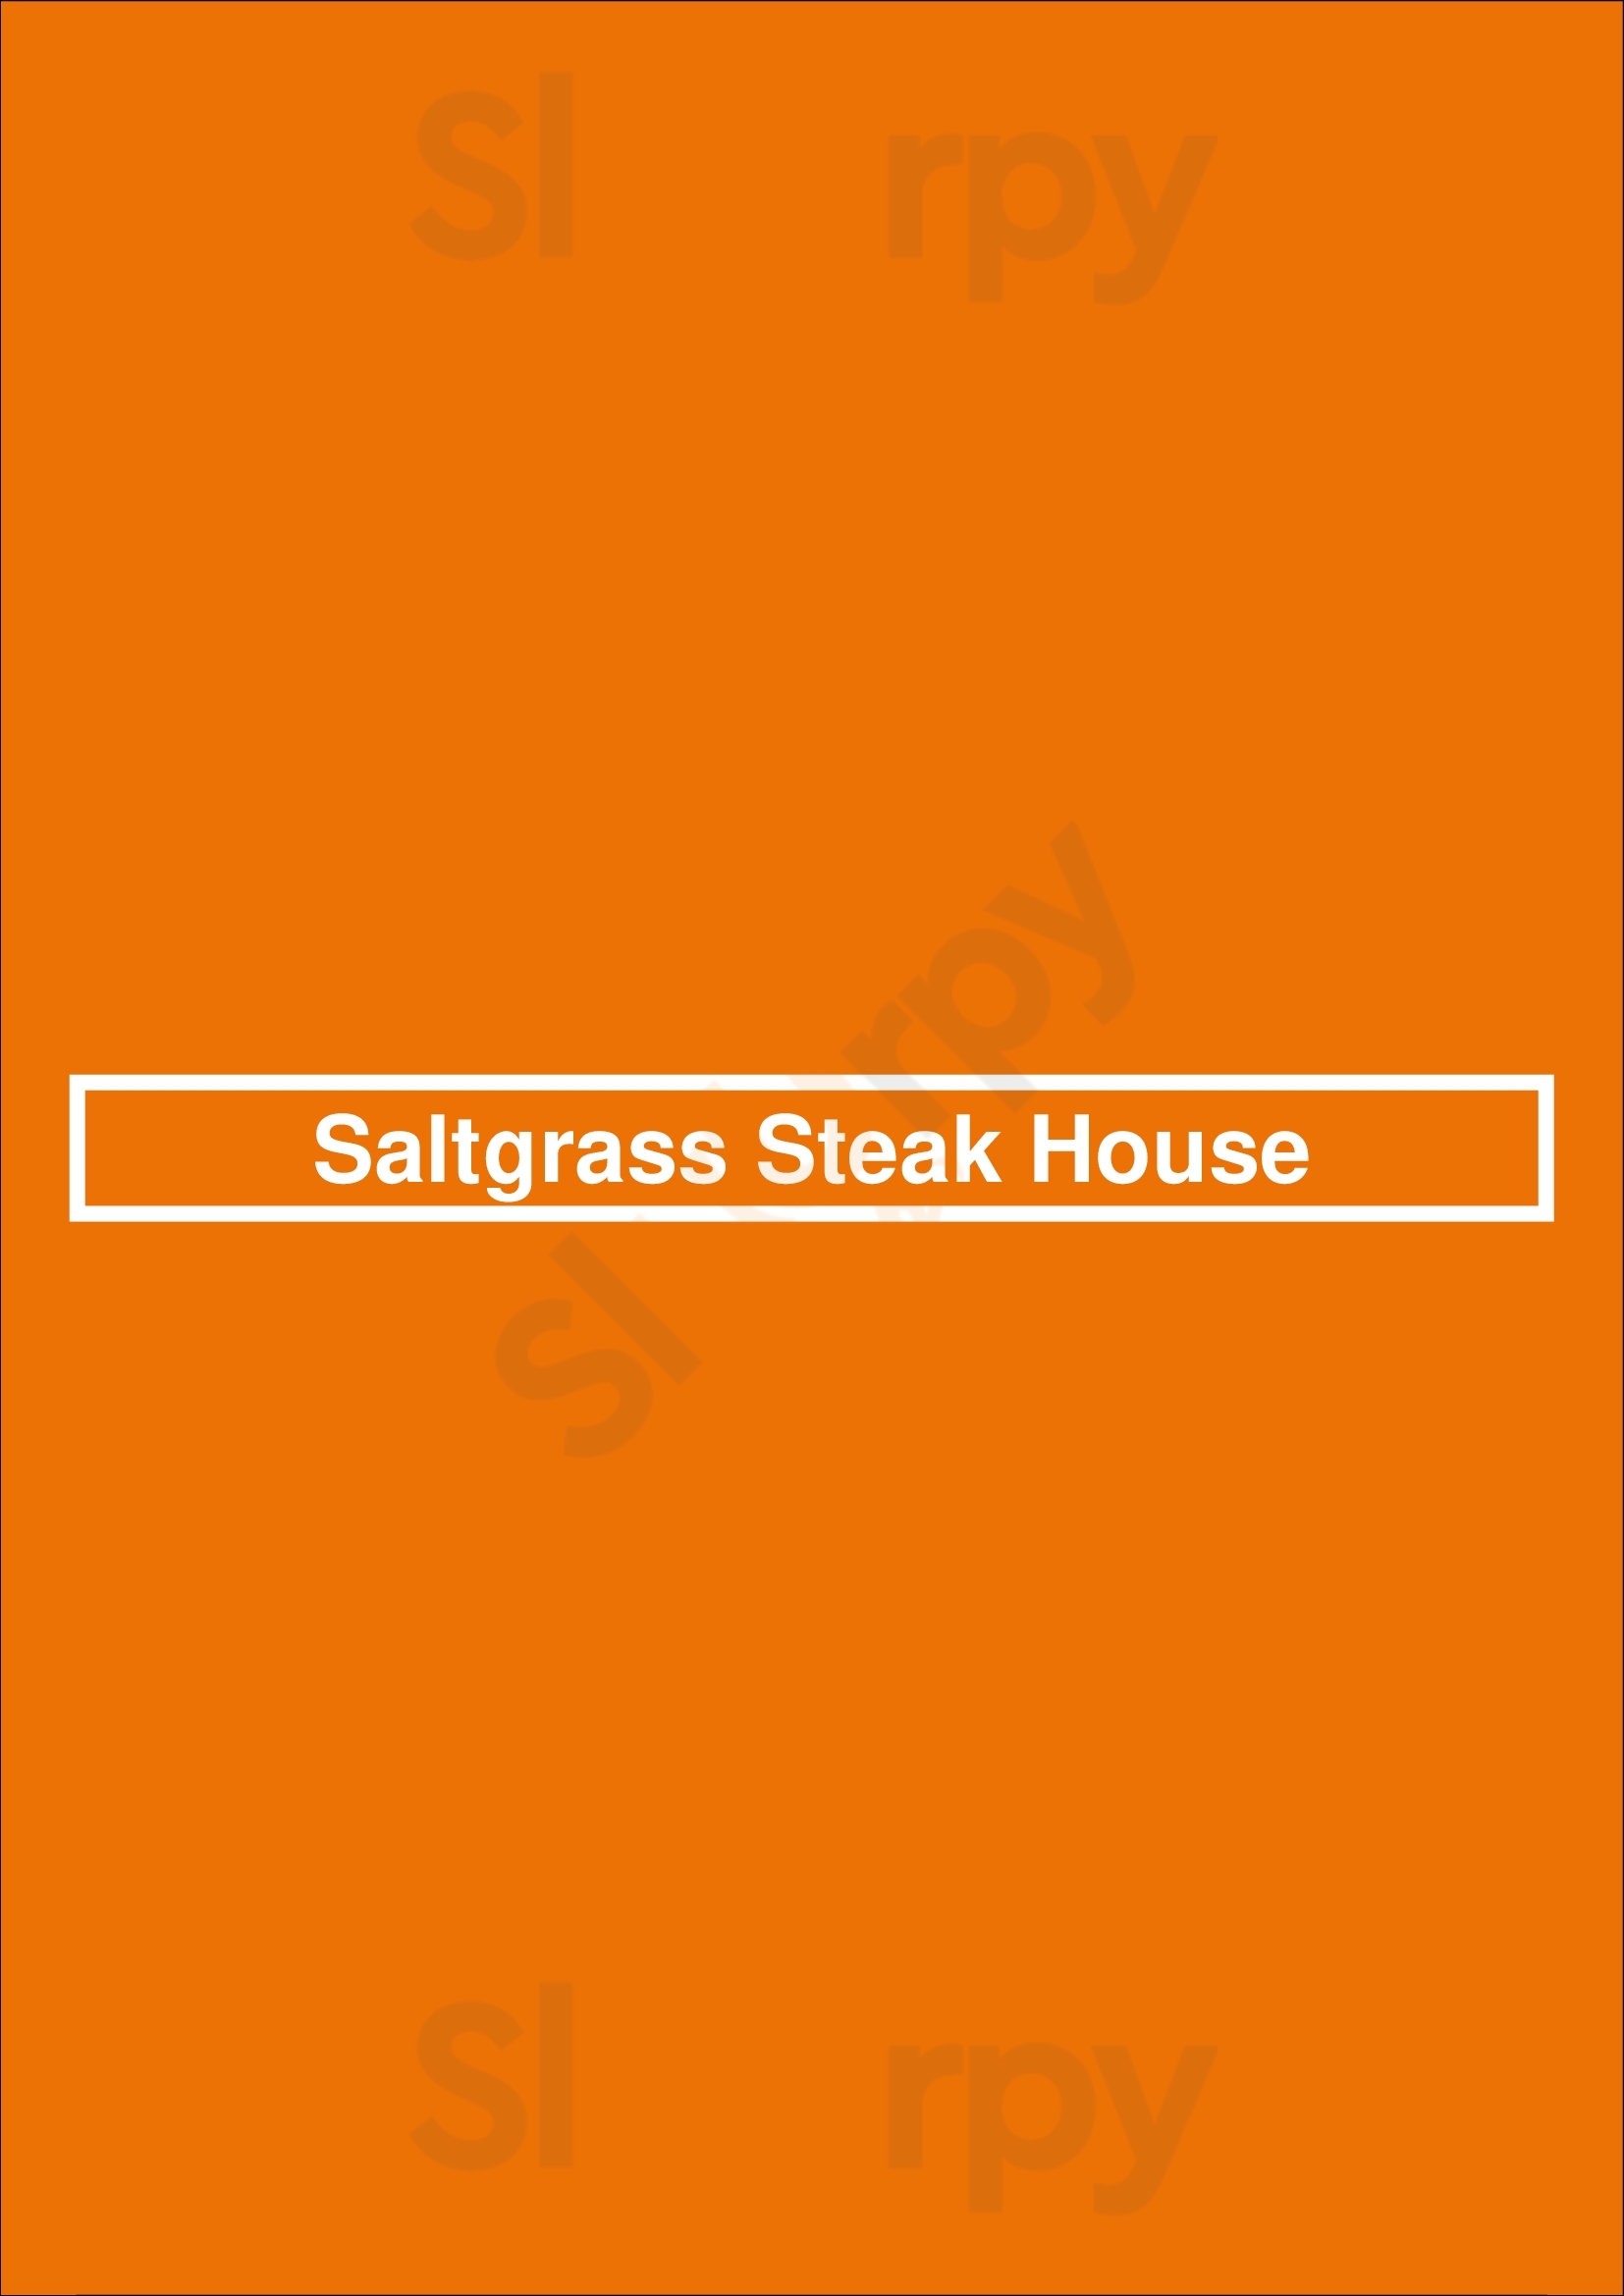 Saltgrass Steak House Bedford Menu - 1